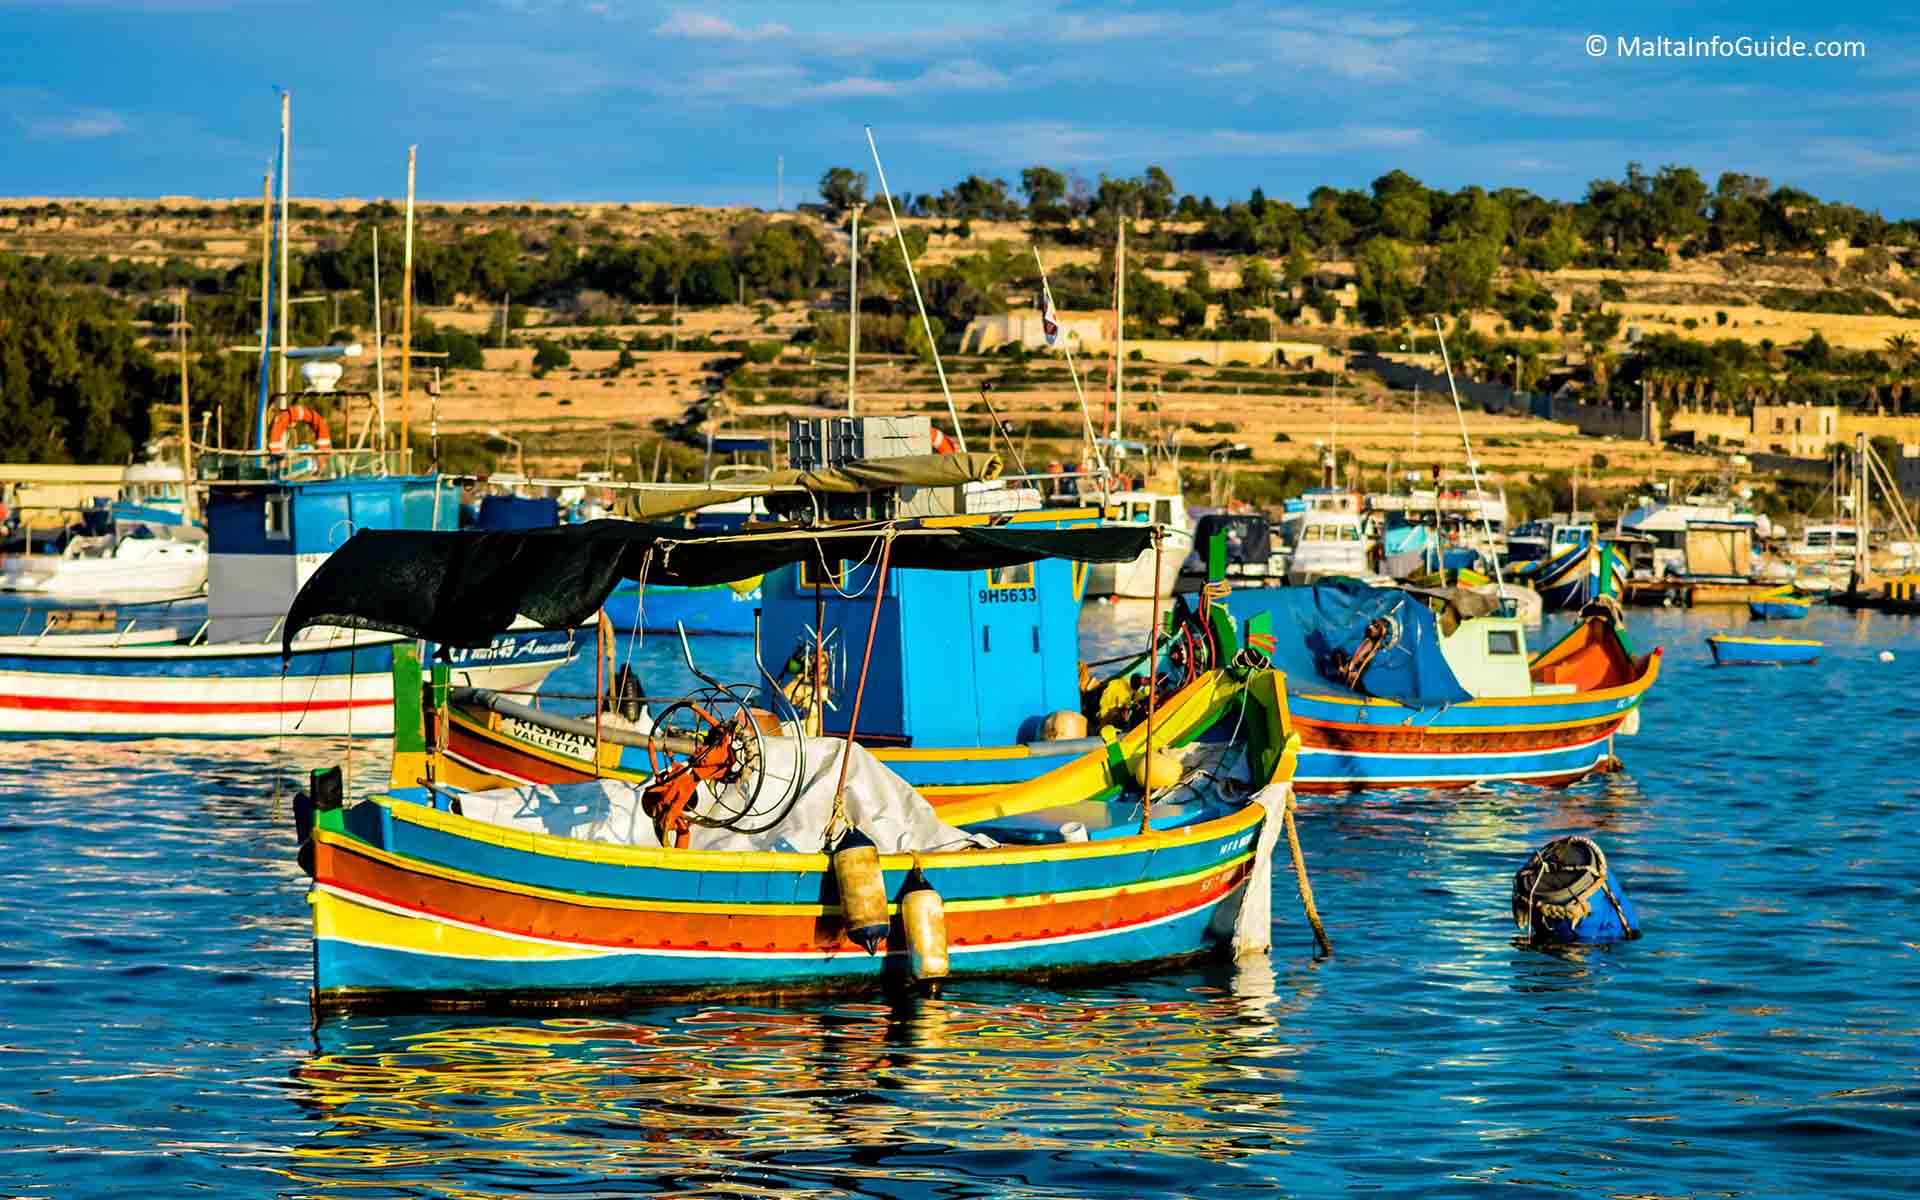 Luzzu boats moored at Marsaxlokk fishing village.